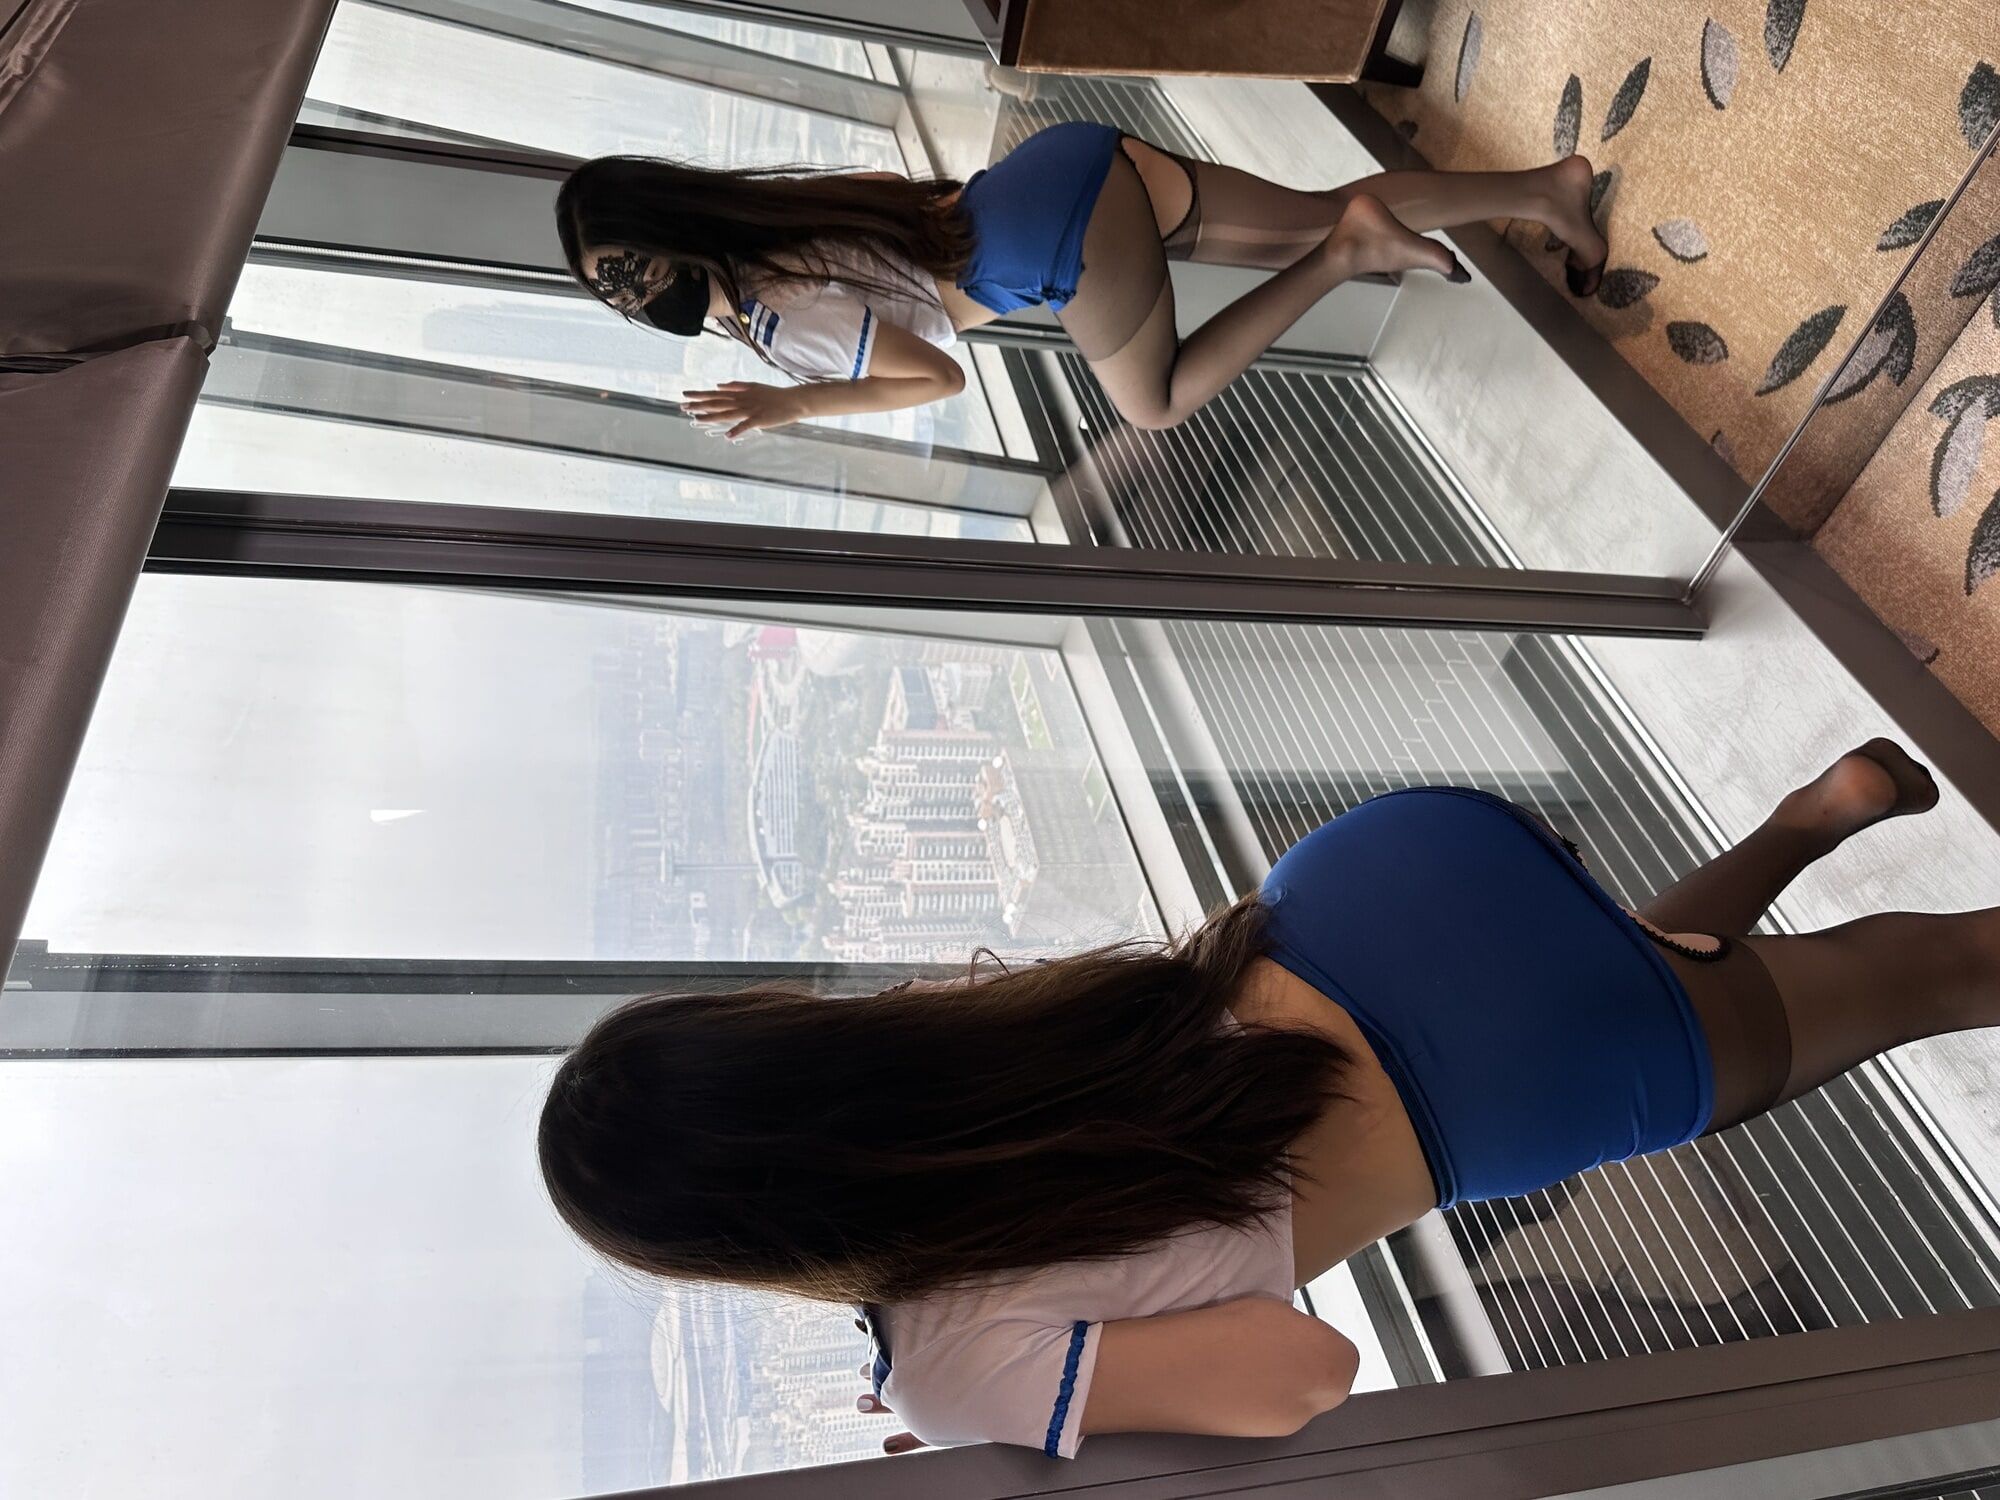 On the 58th floor